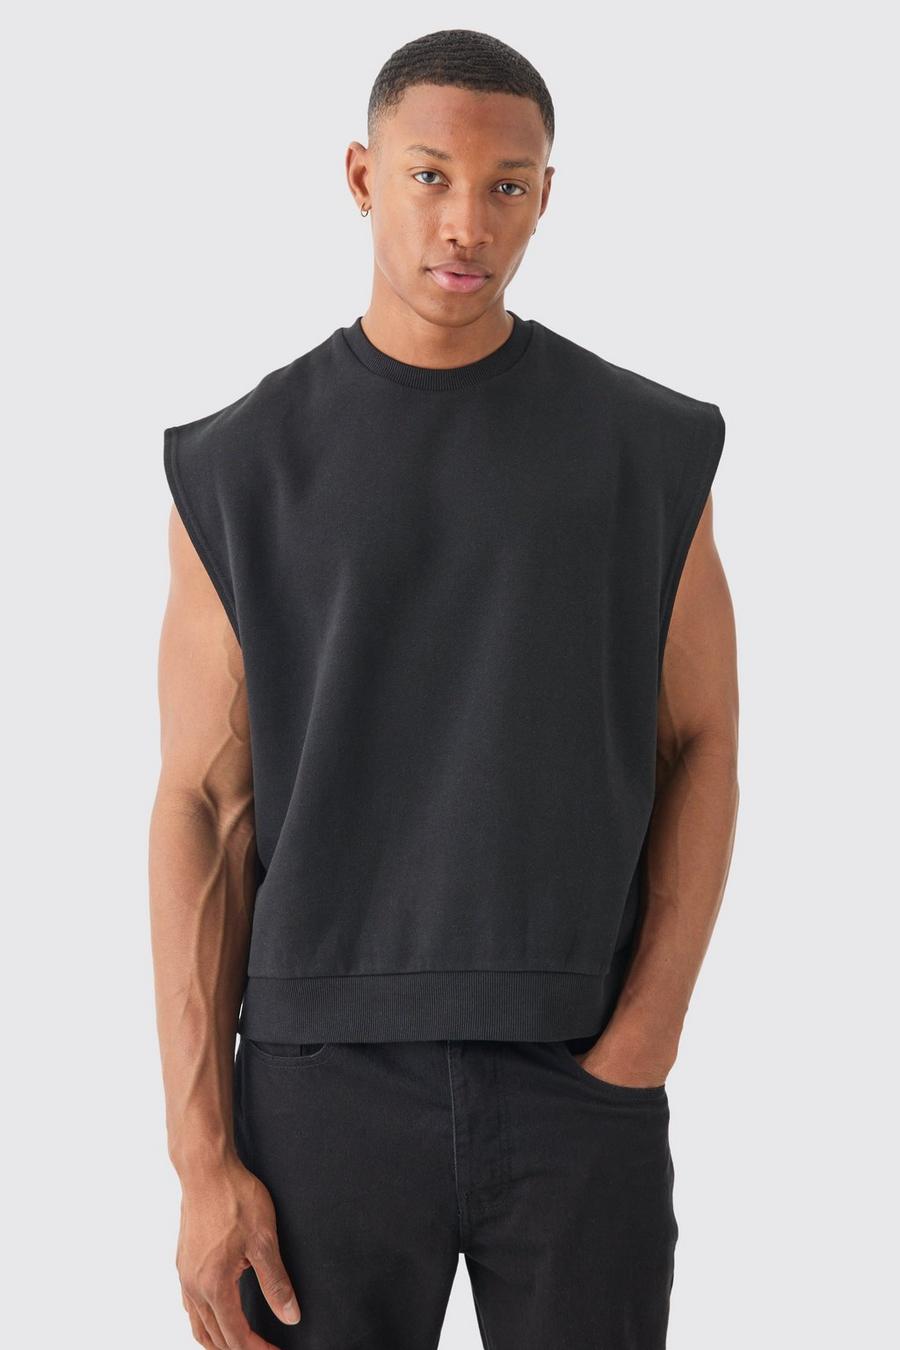 Black Oversized Boxy Jersey Sweatshirt Tank Top